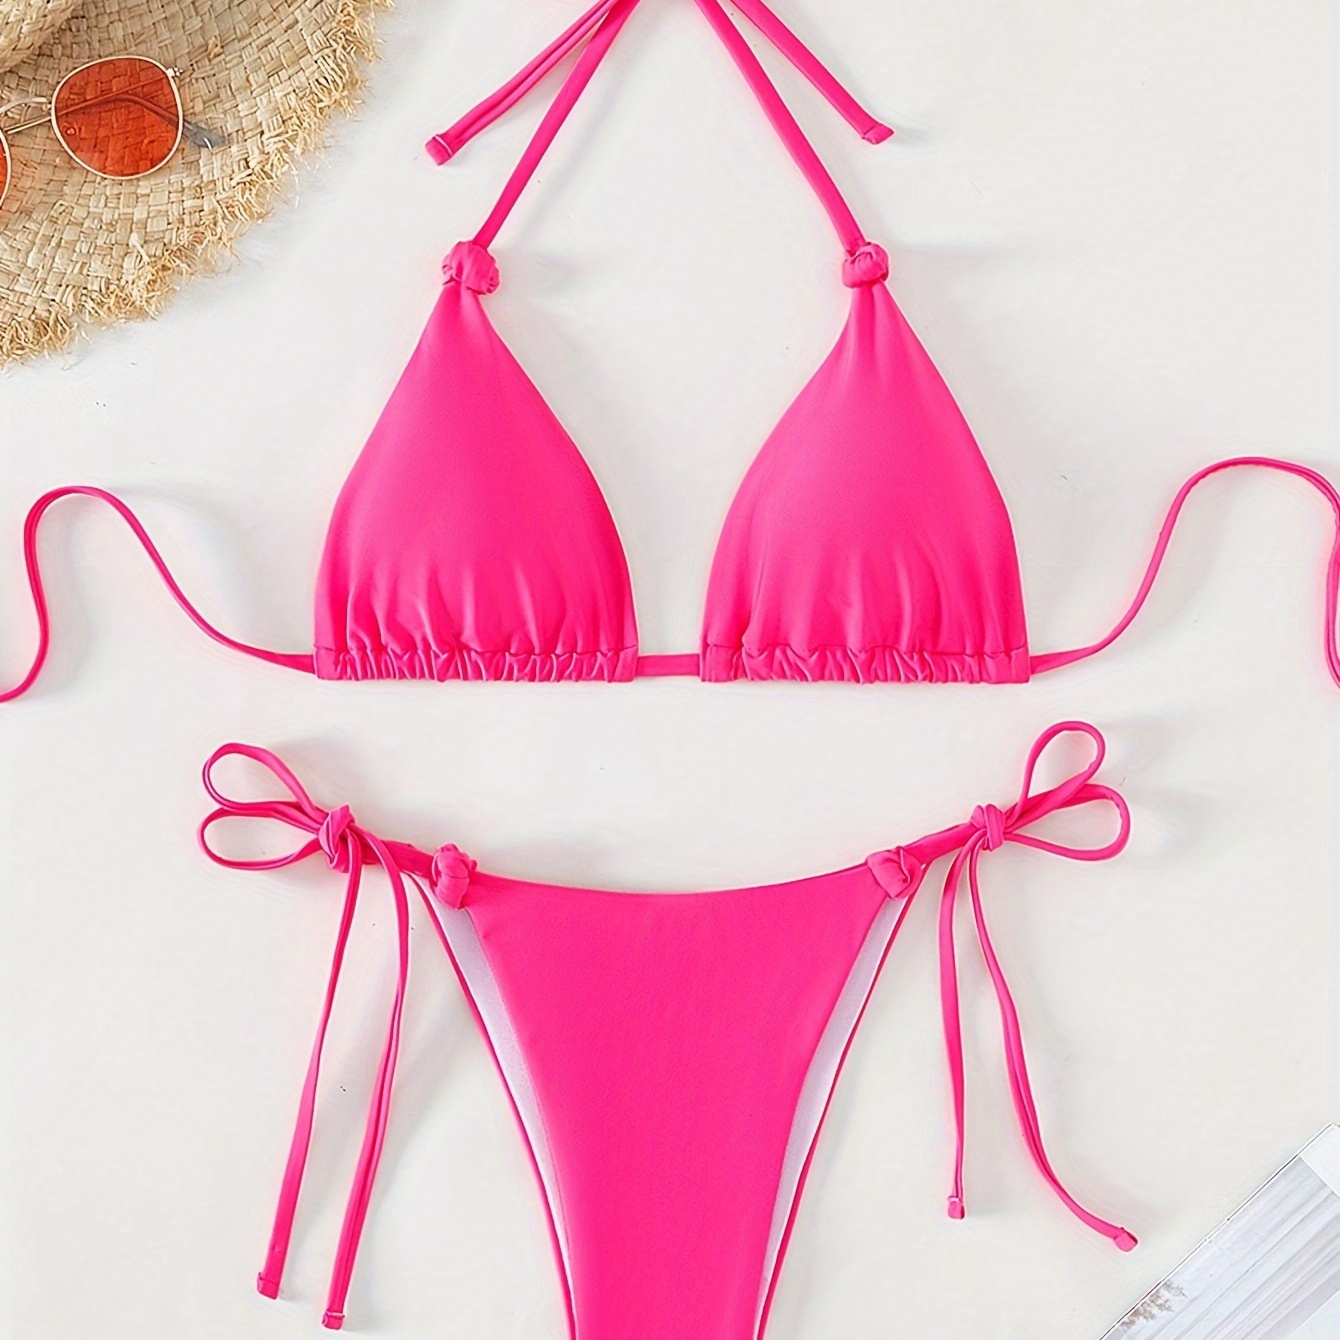 

Plain Hot Pinkish Color Knot Triangle Halter Tie Strap Backless 2 Piece Set Bikini Swimsuits, Women's Swimwear & Clothing